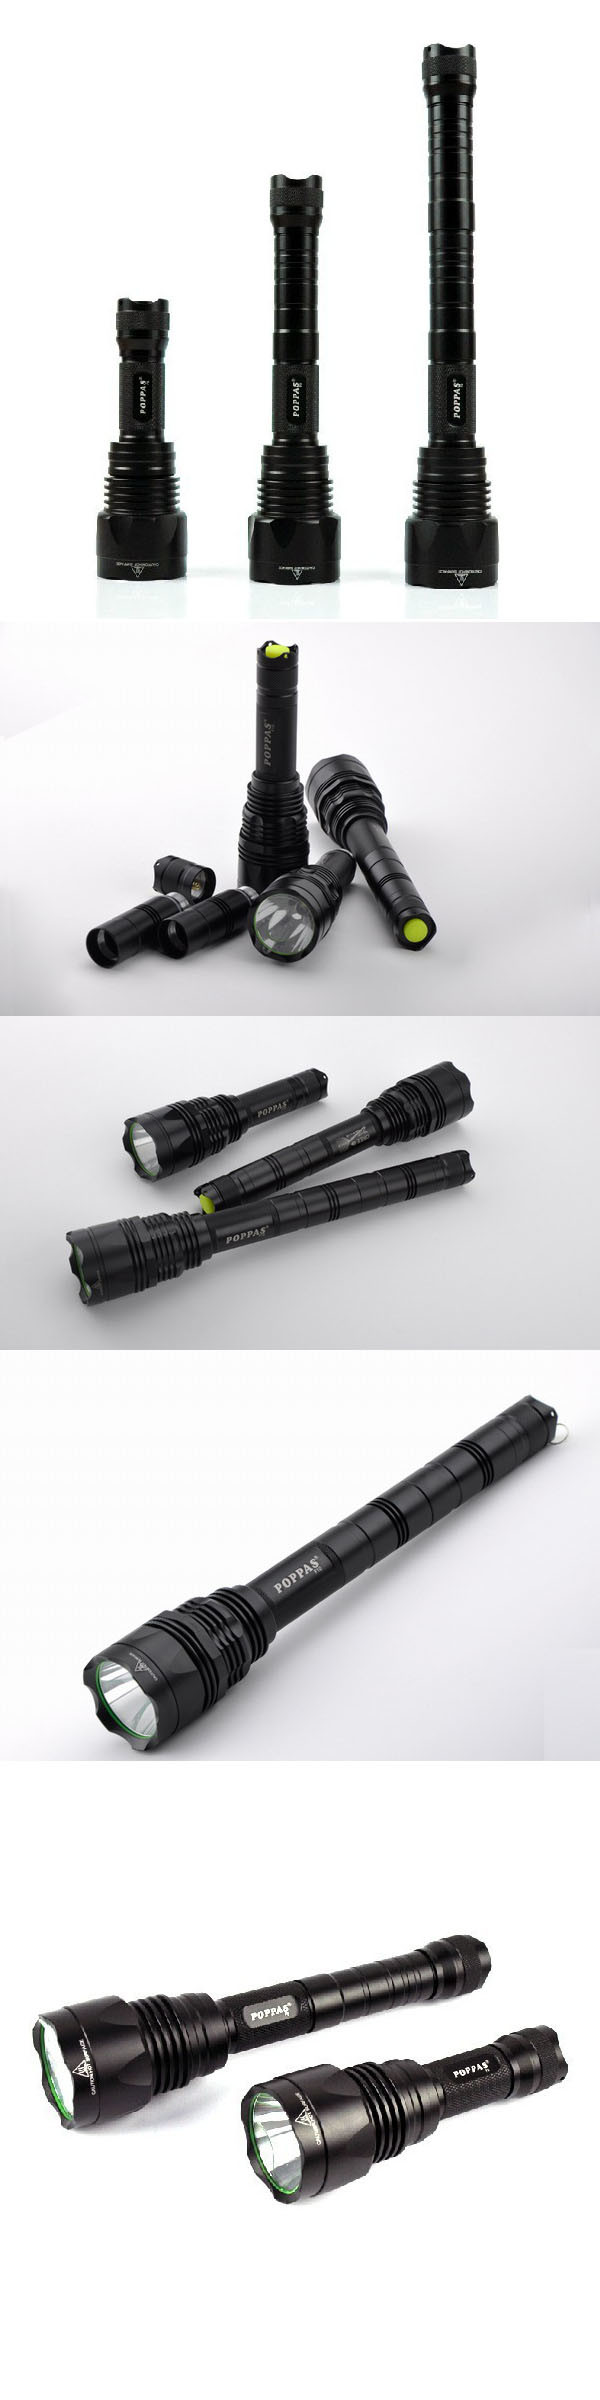 Waterproof Ipx7 CREE T6 Brightest Aluminum Tactical LED Flashlight (POPPAS-F9)